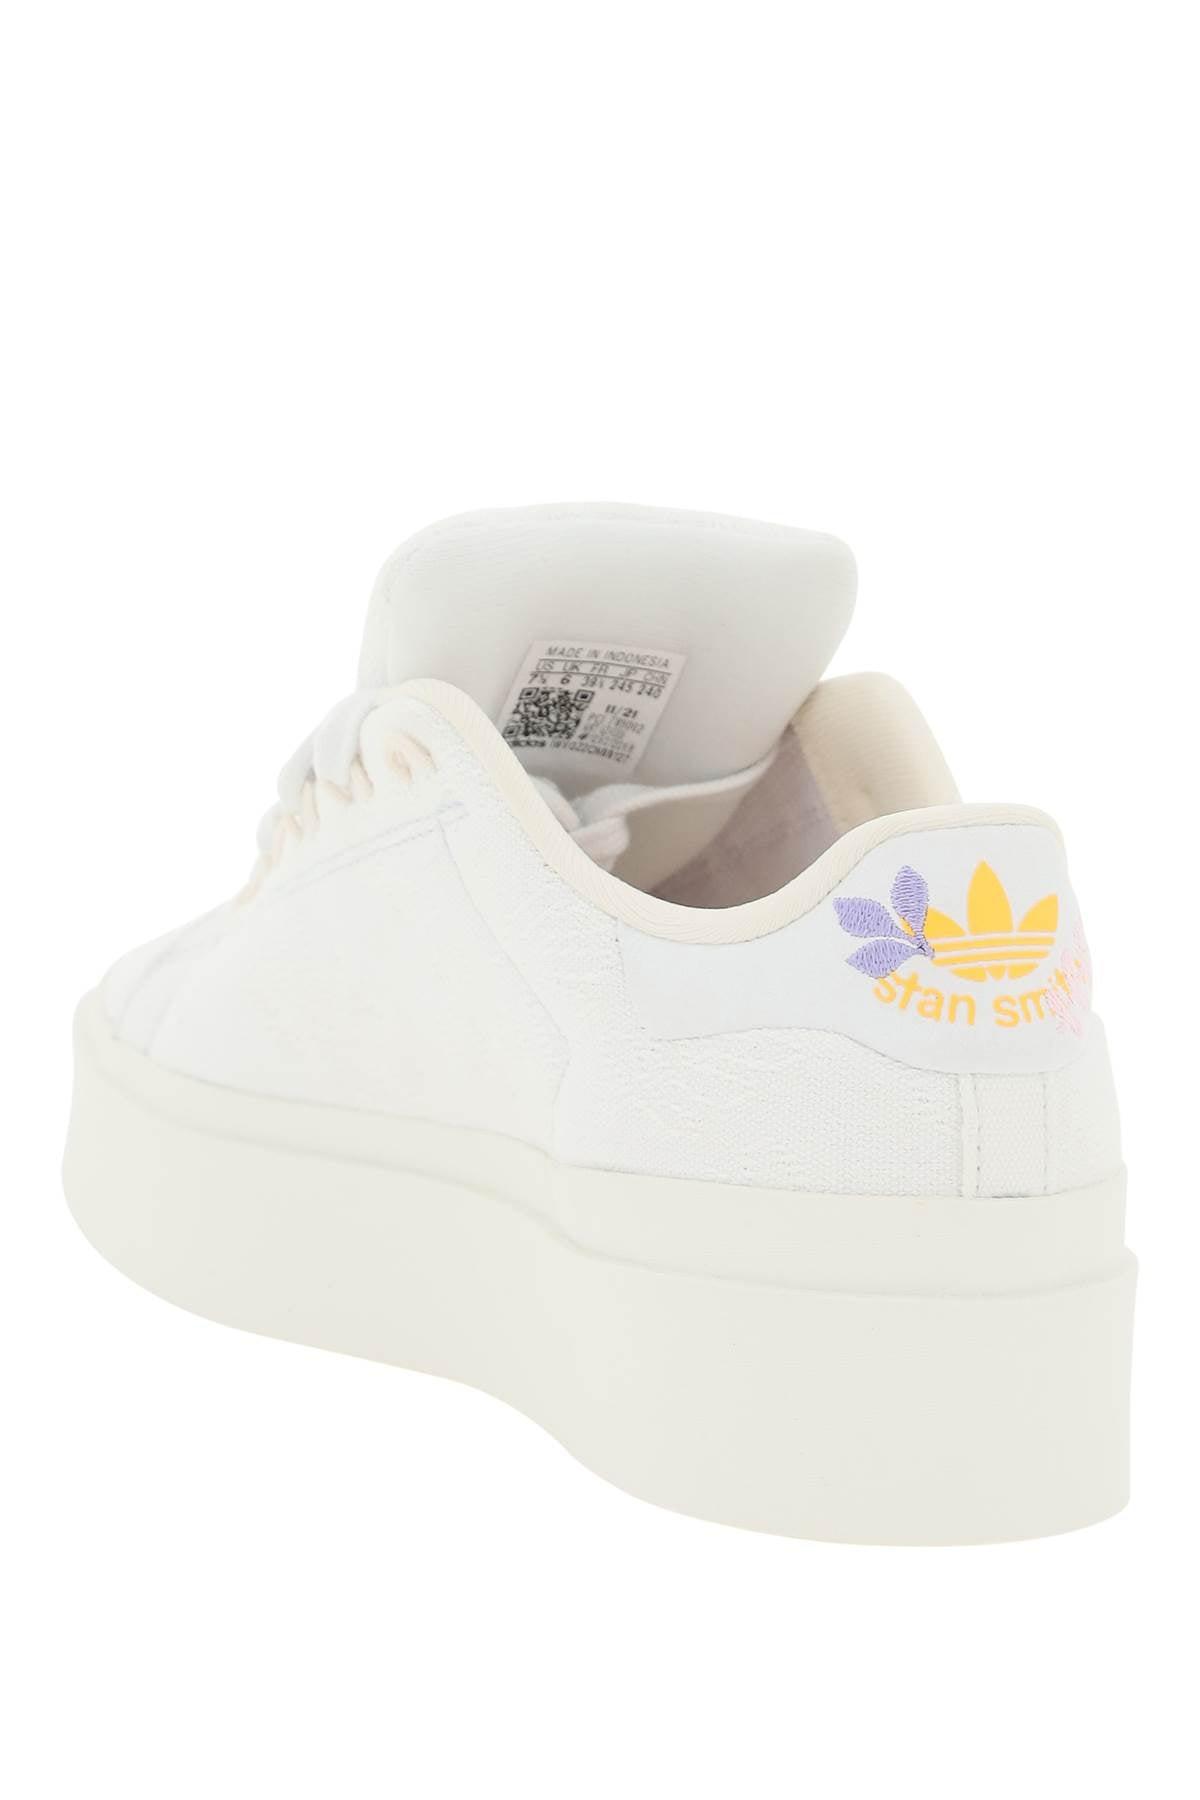 adidas Originals Stan Smith Bonega Sneakers in White | Lyst